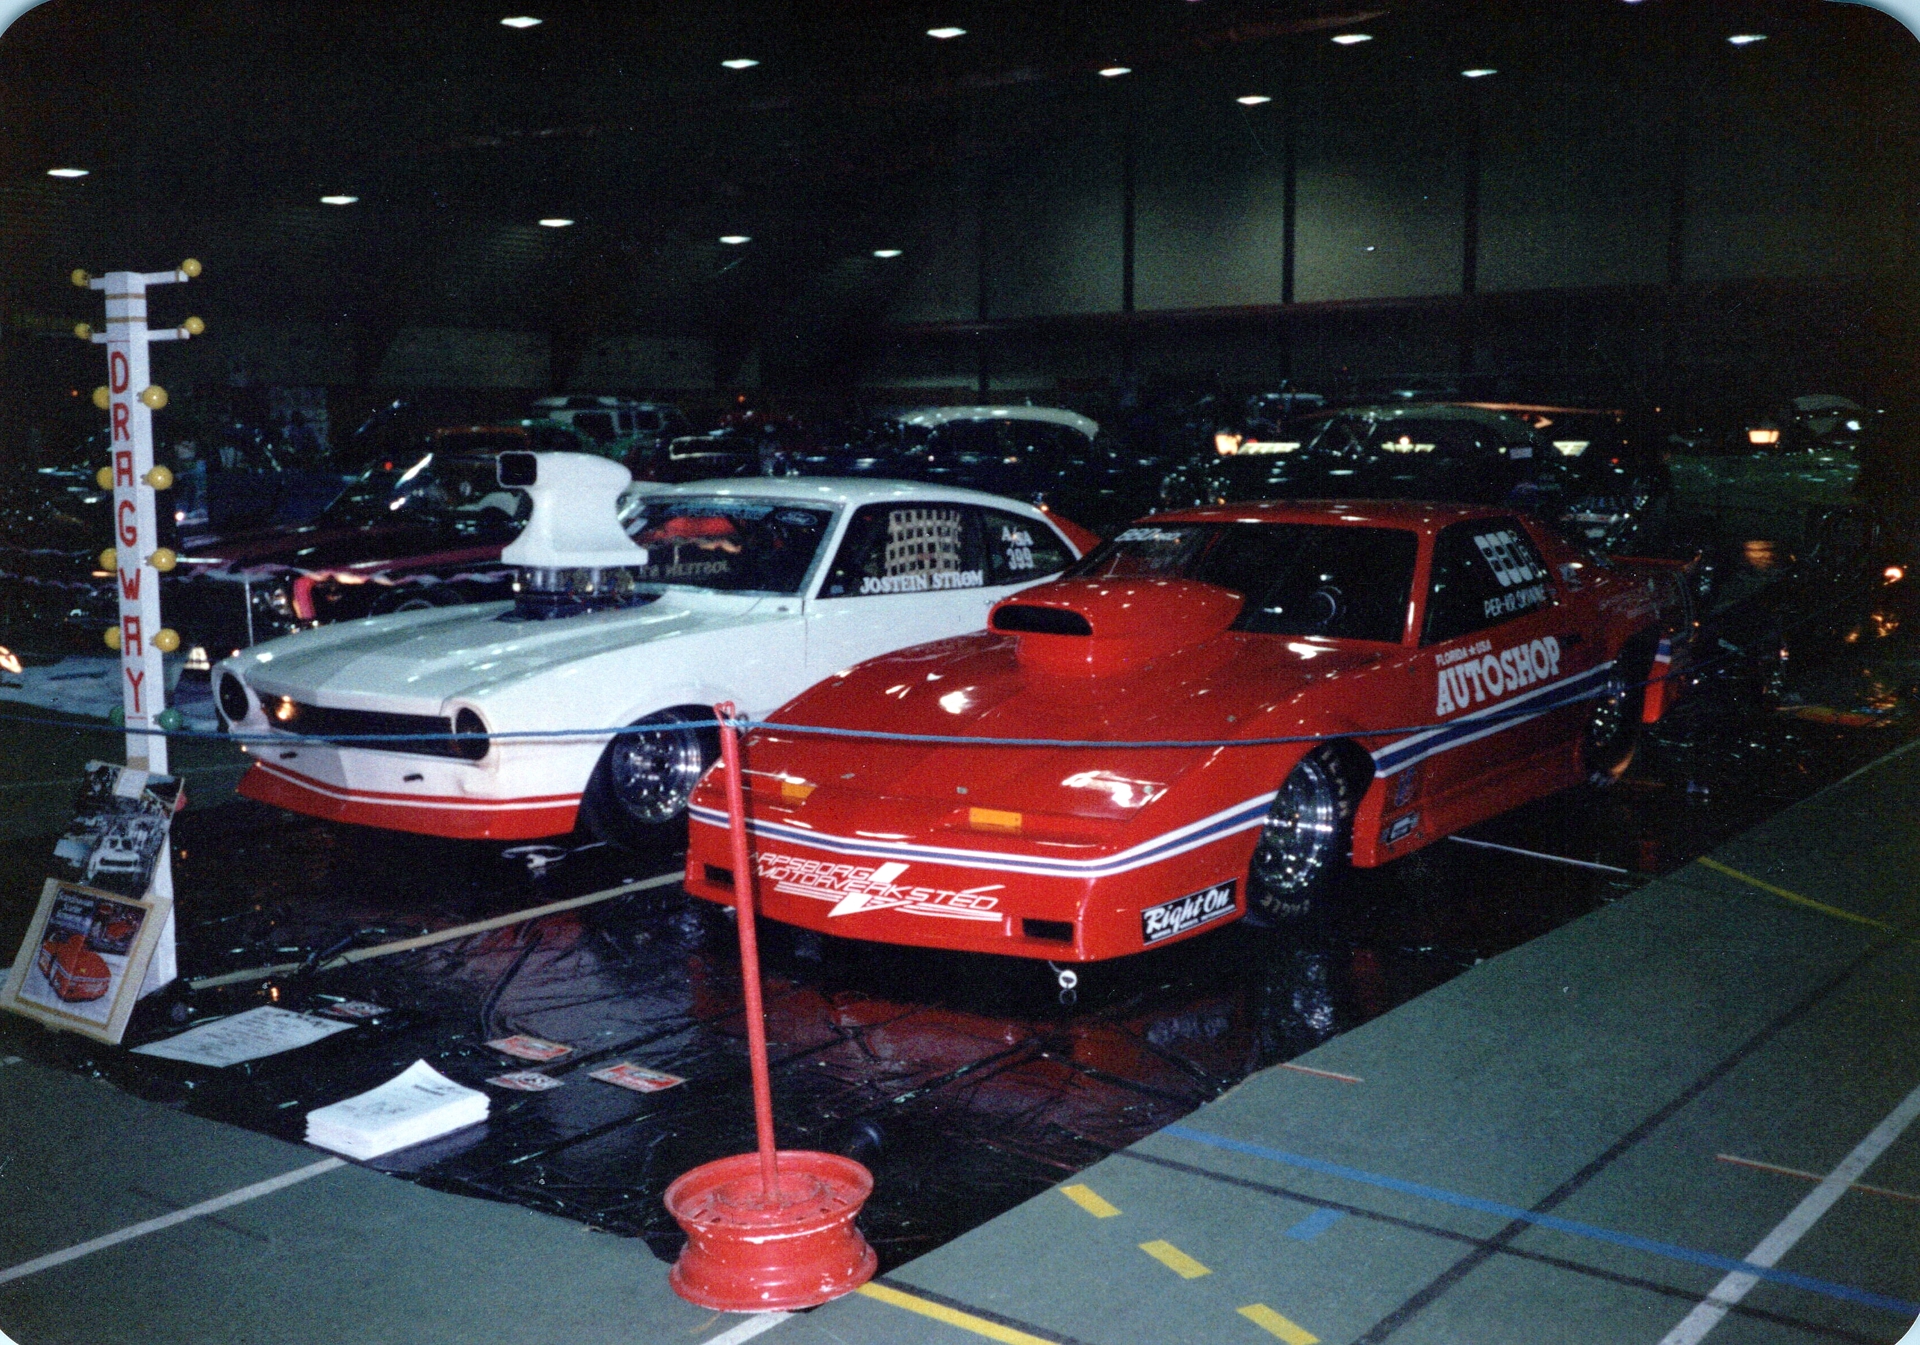 1989_Motorshow Askimhallen_0001.jpg